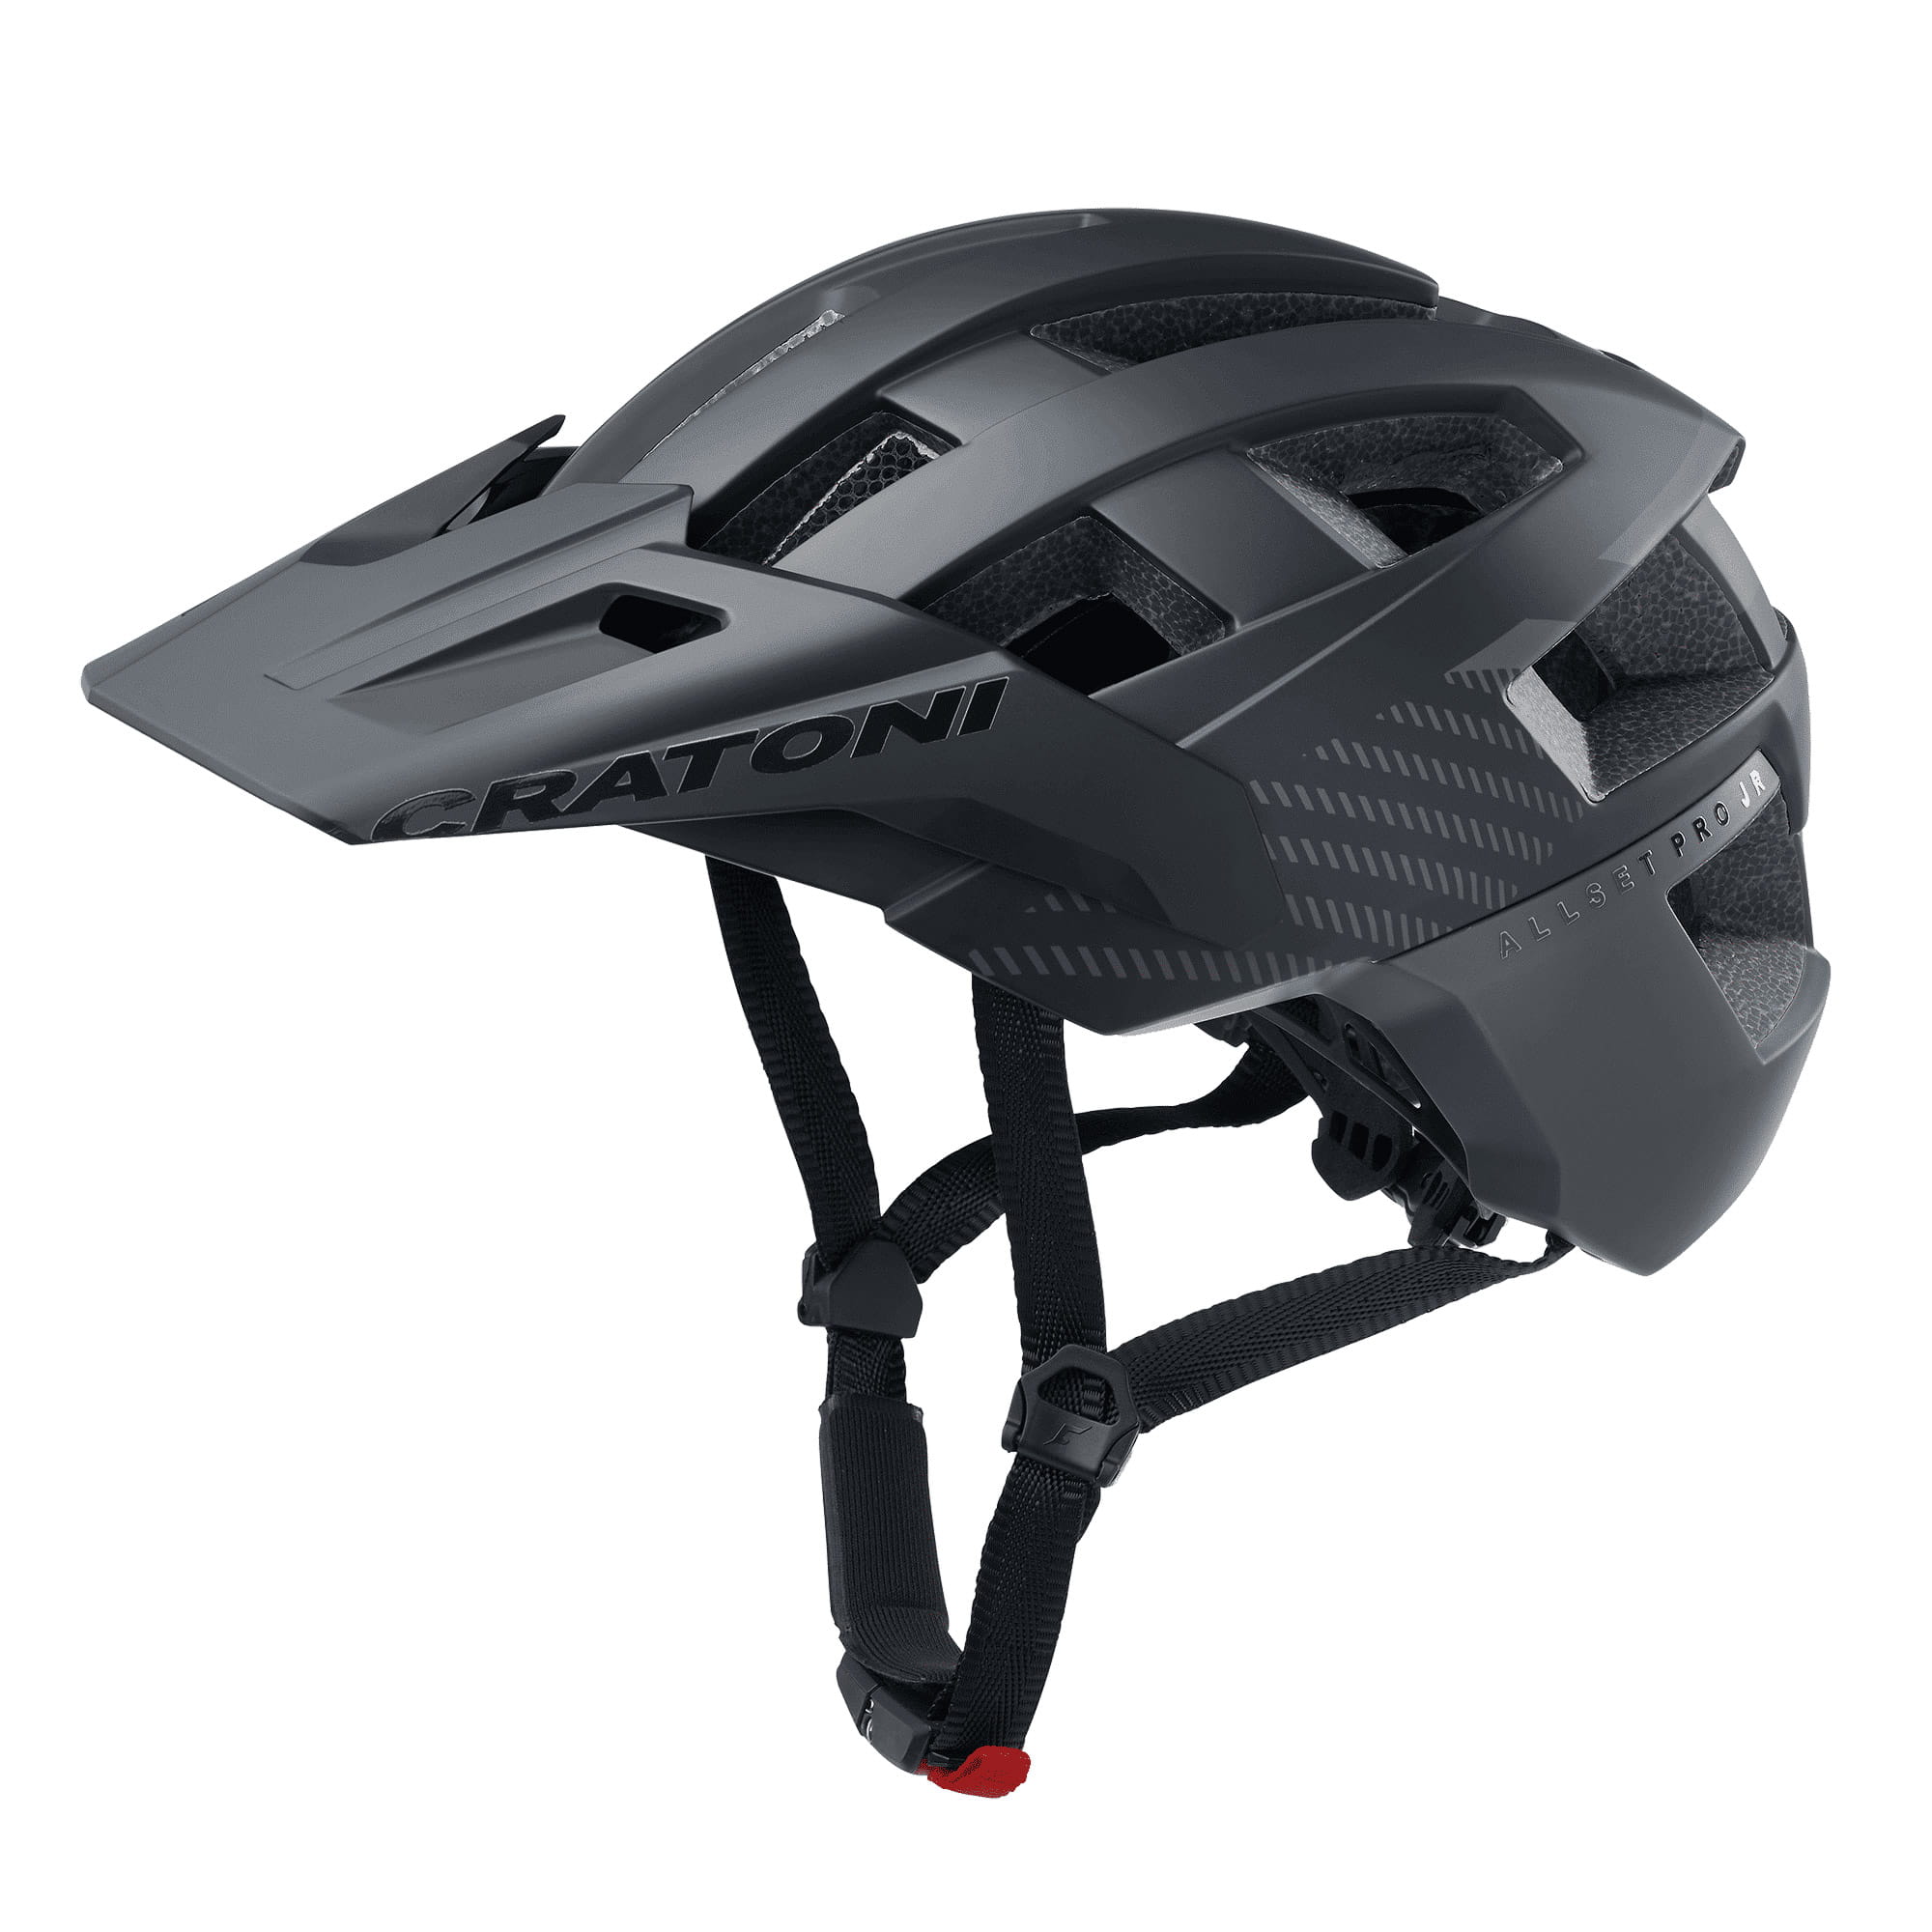 Cratoni AllSet Pro MTB Helm